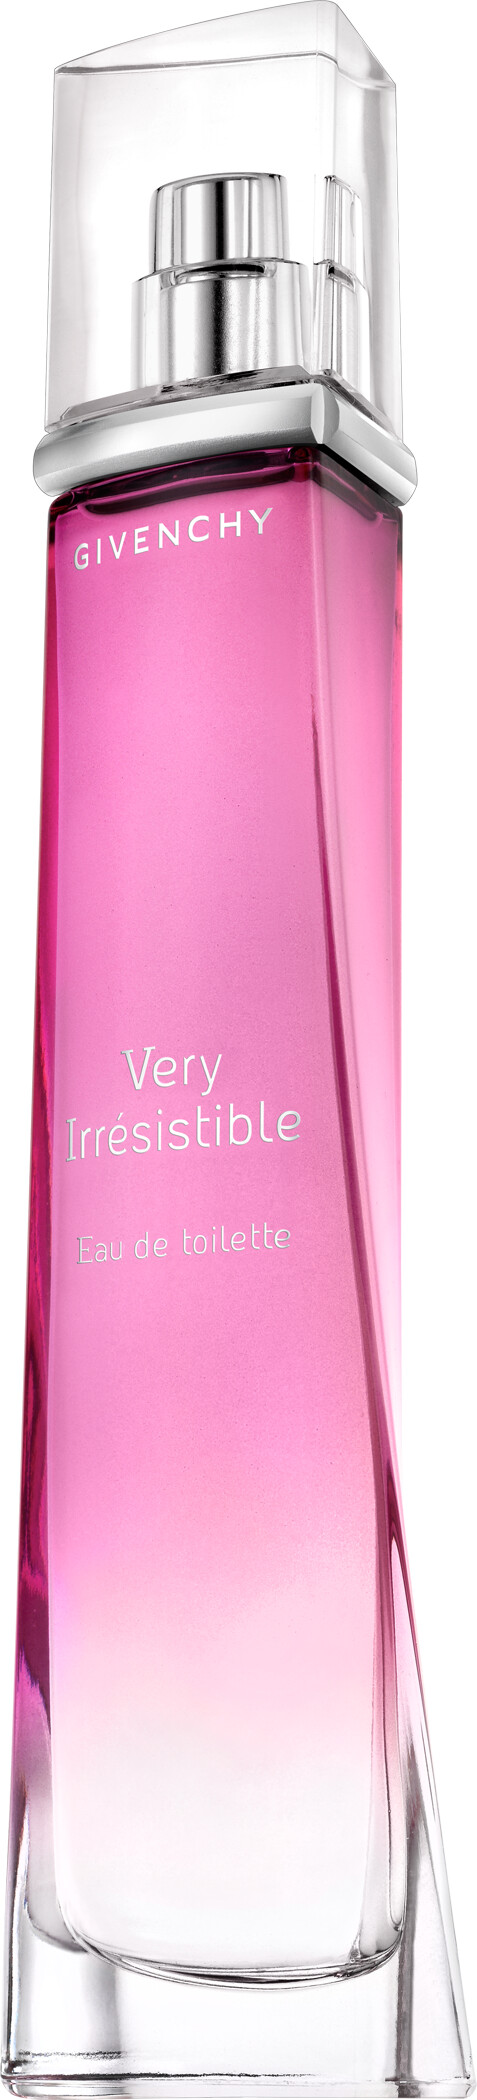 GIVENCHY Very Irresistible Eau de Toilette Spray 75ml